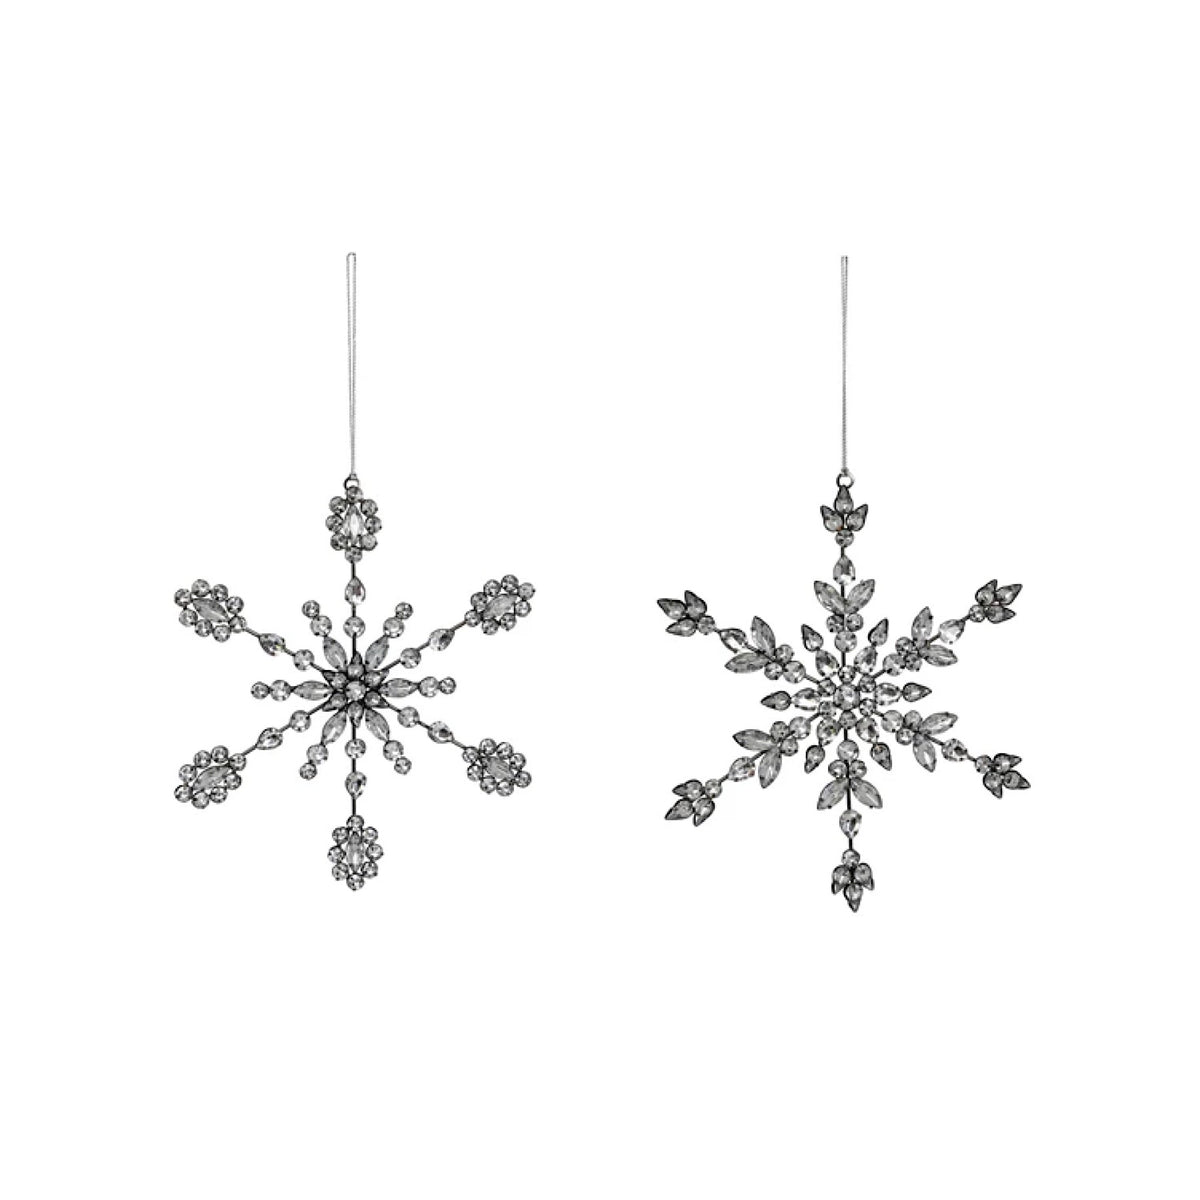 Jewel Snowflake Ornament, 2 Styles